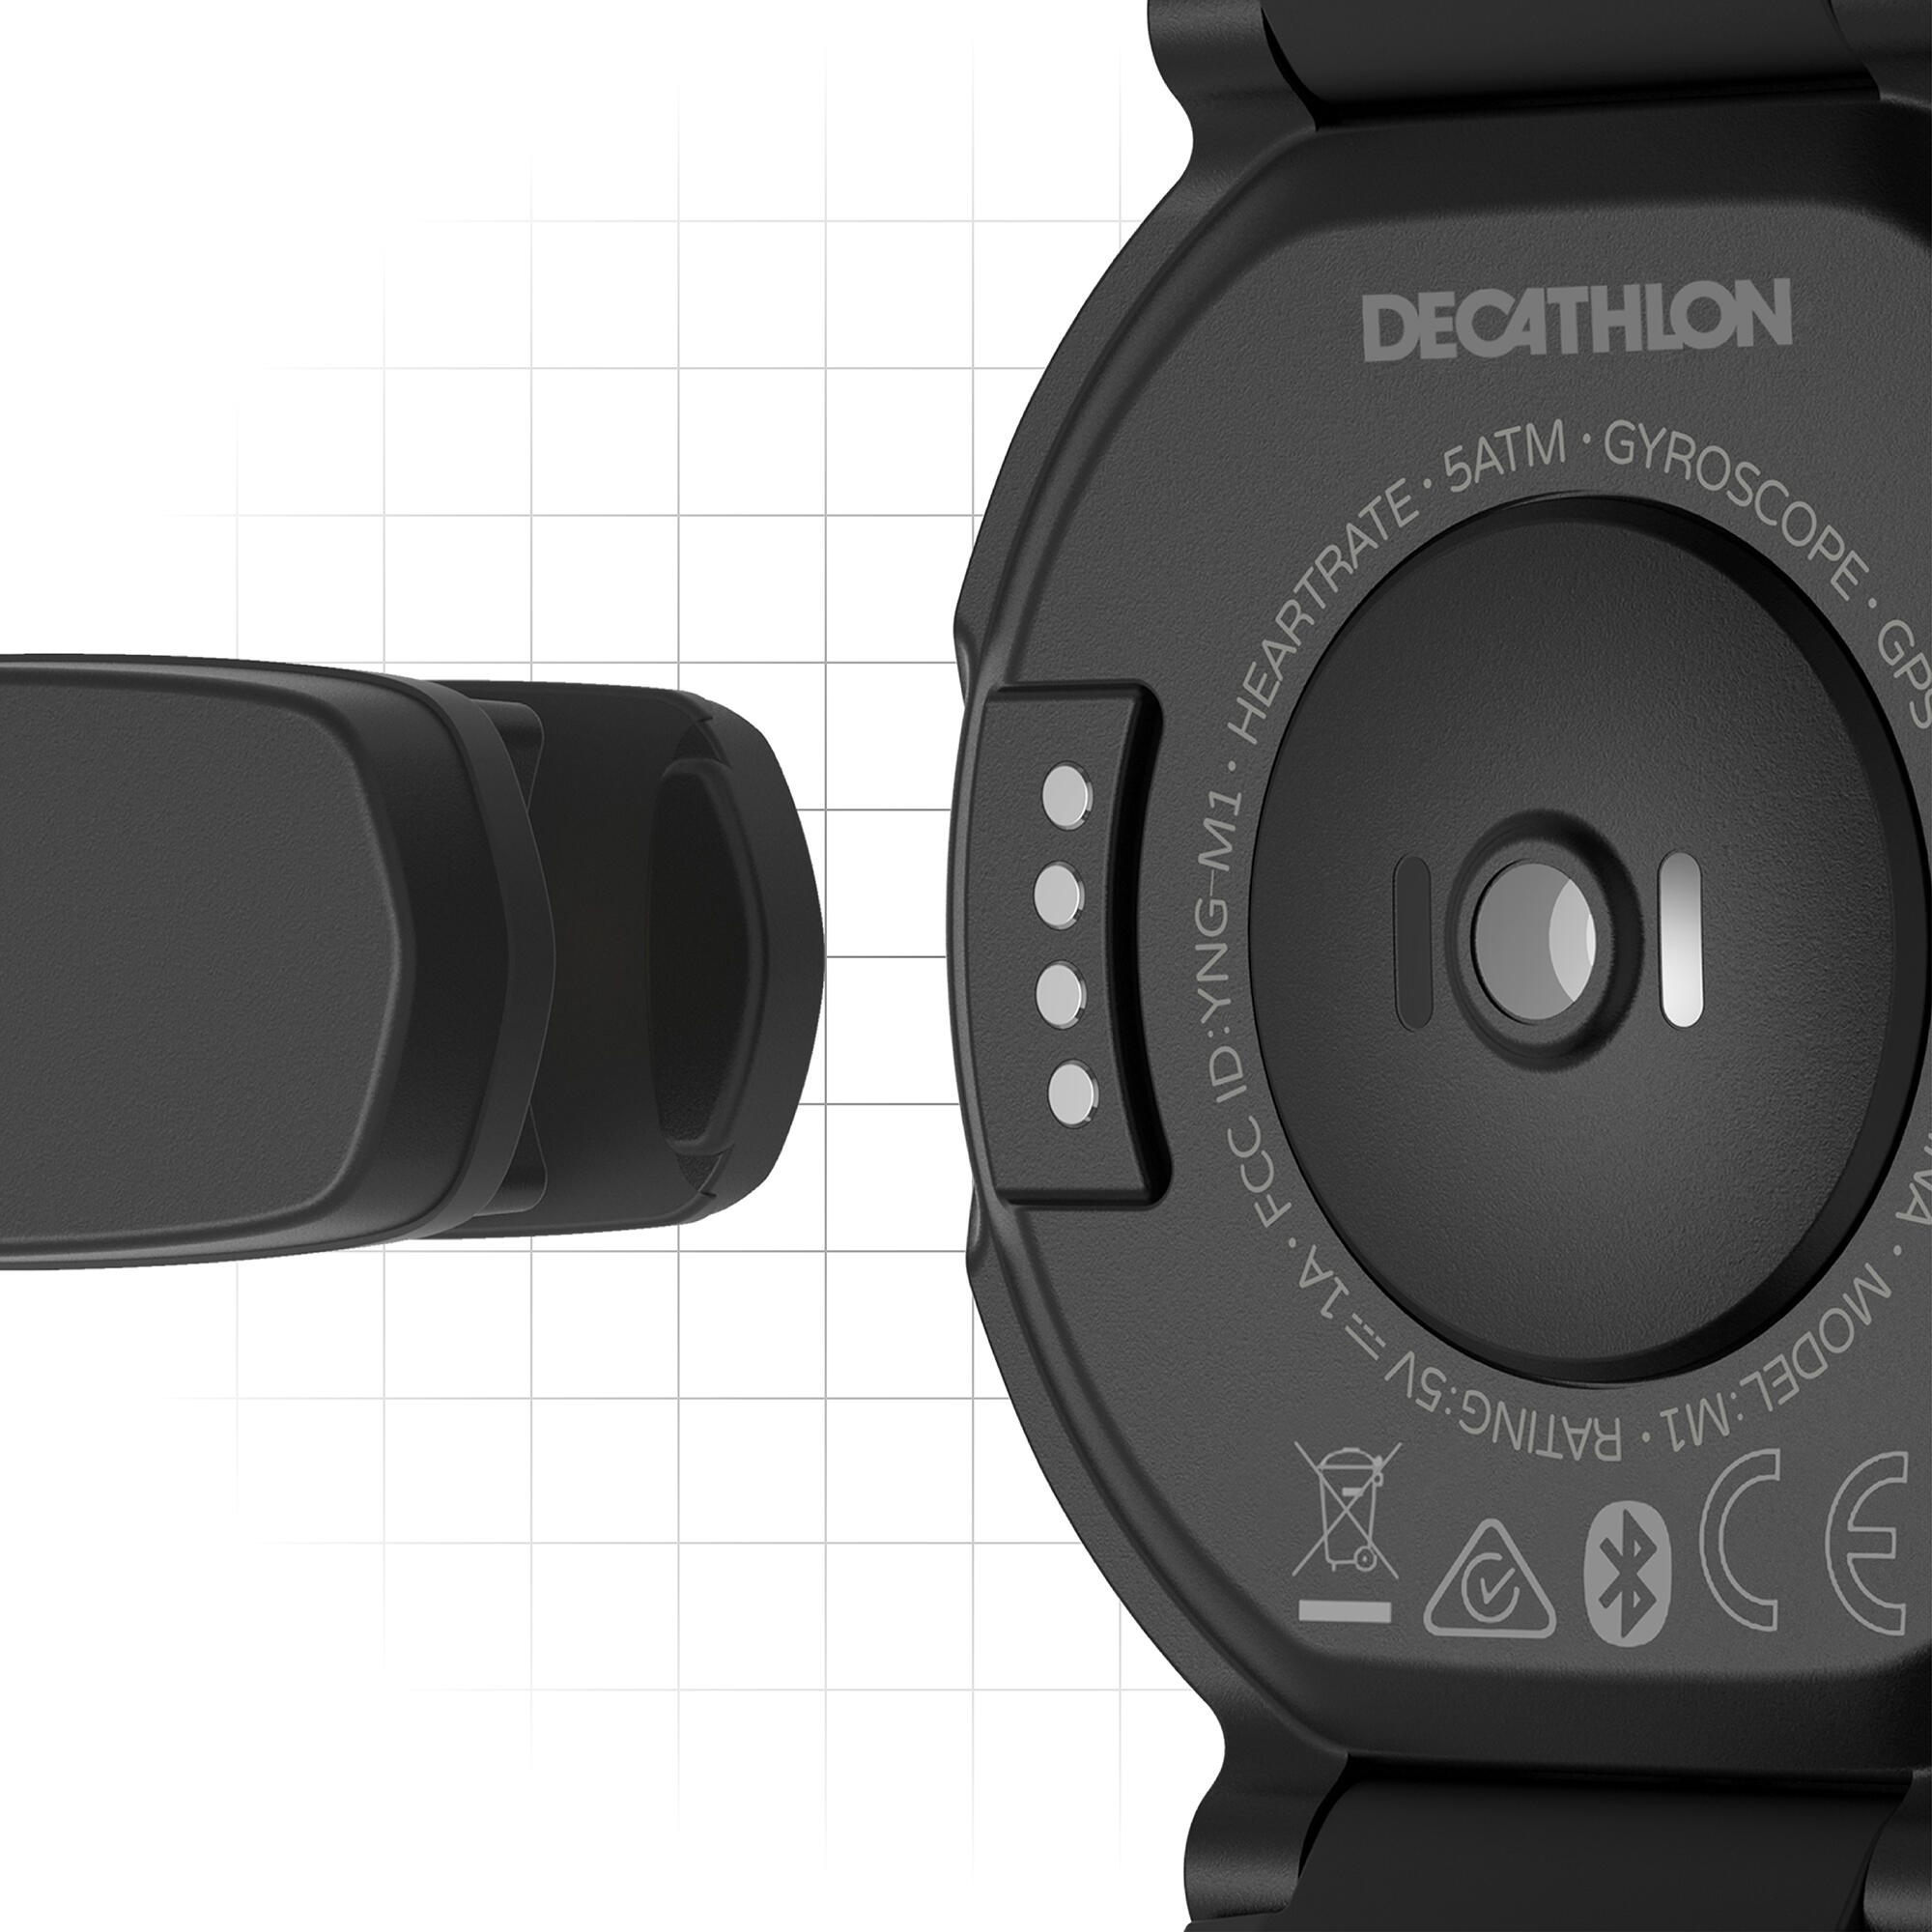 GPS Smart Watch - Coros 500 Black - KIPRUN